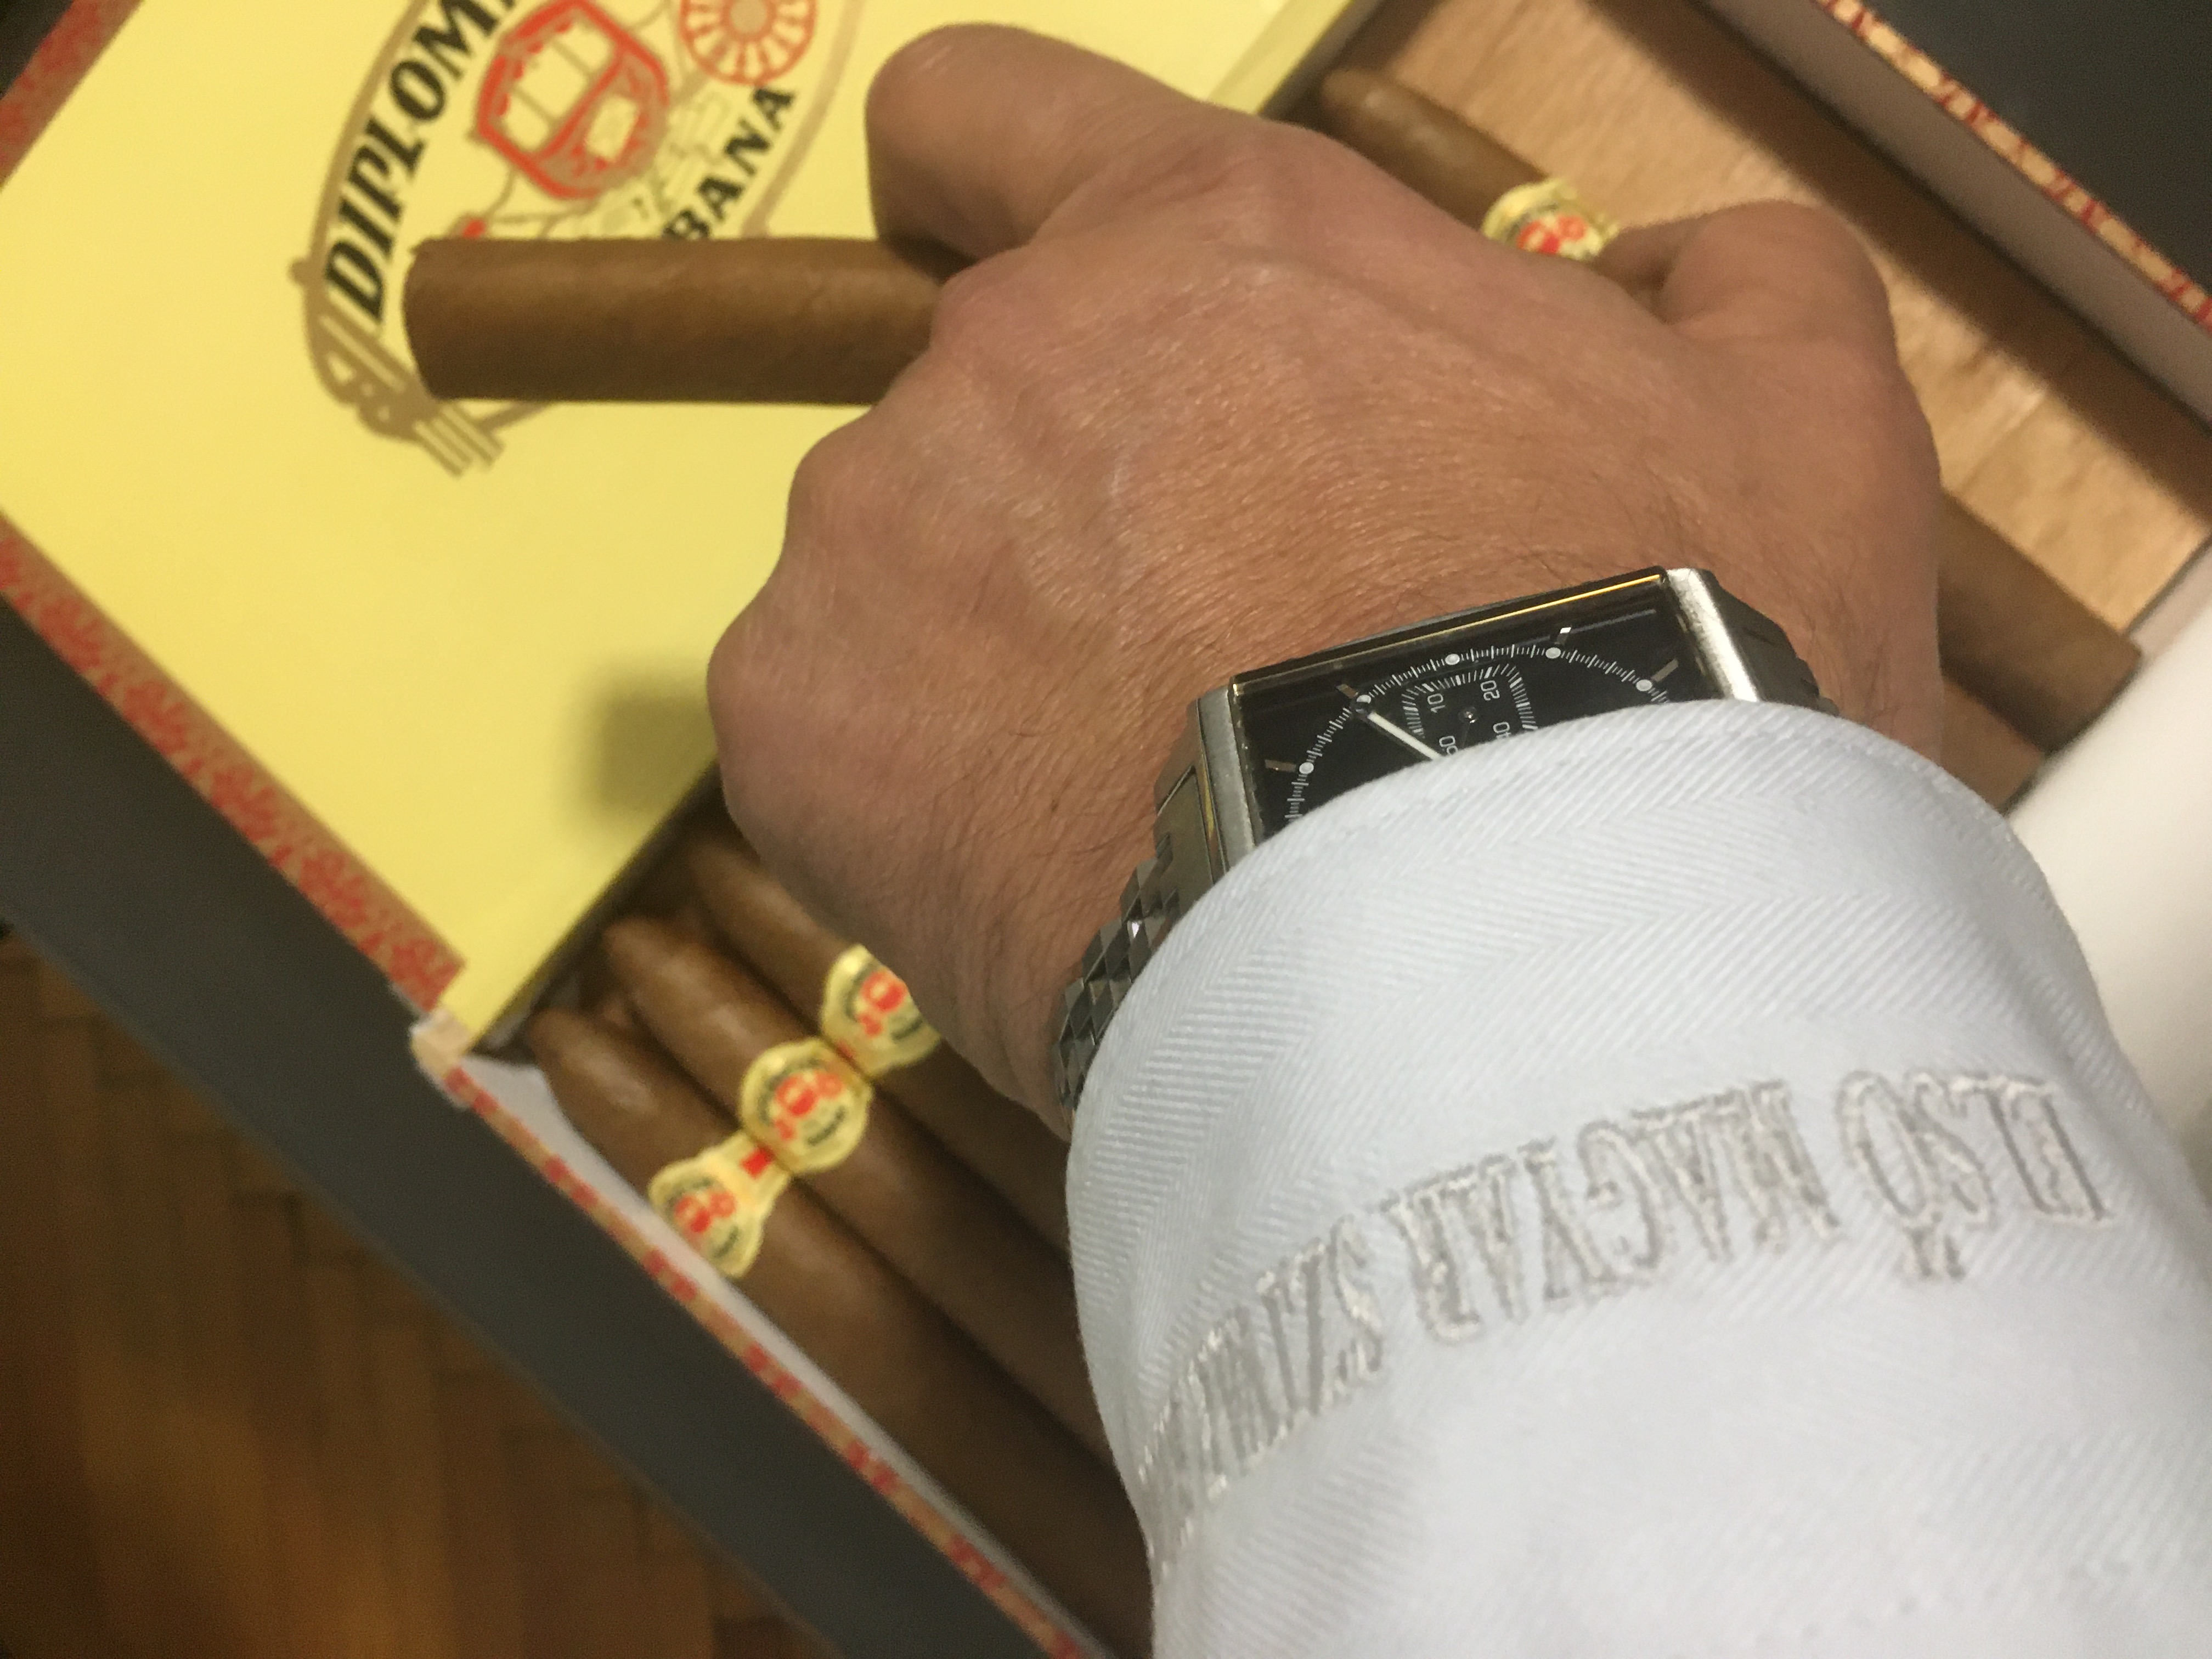 diplomaticos_no2_first_hungarian_cigar_club_2.JPG